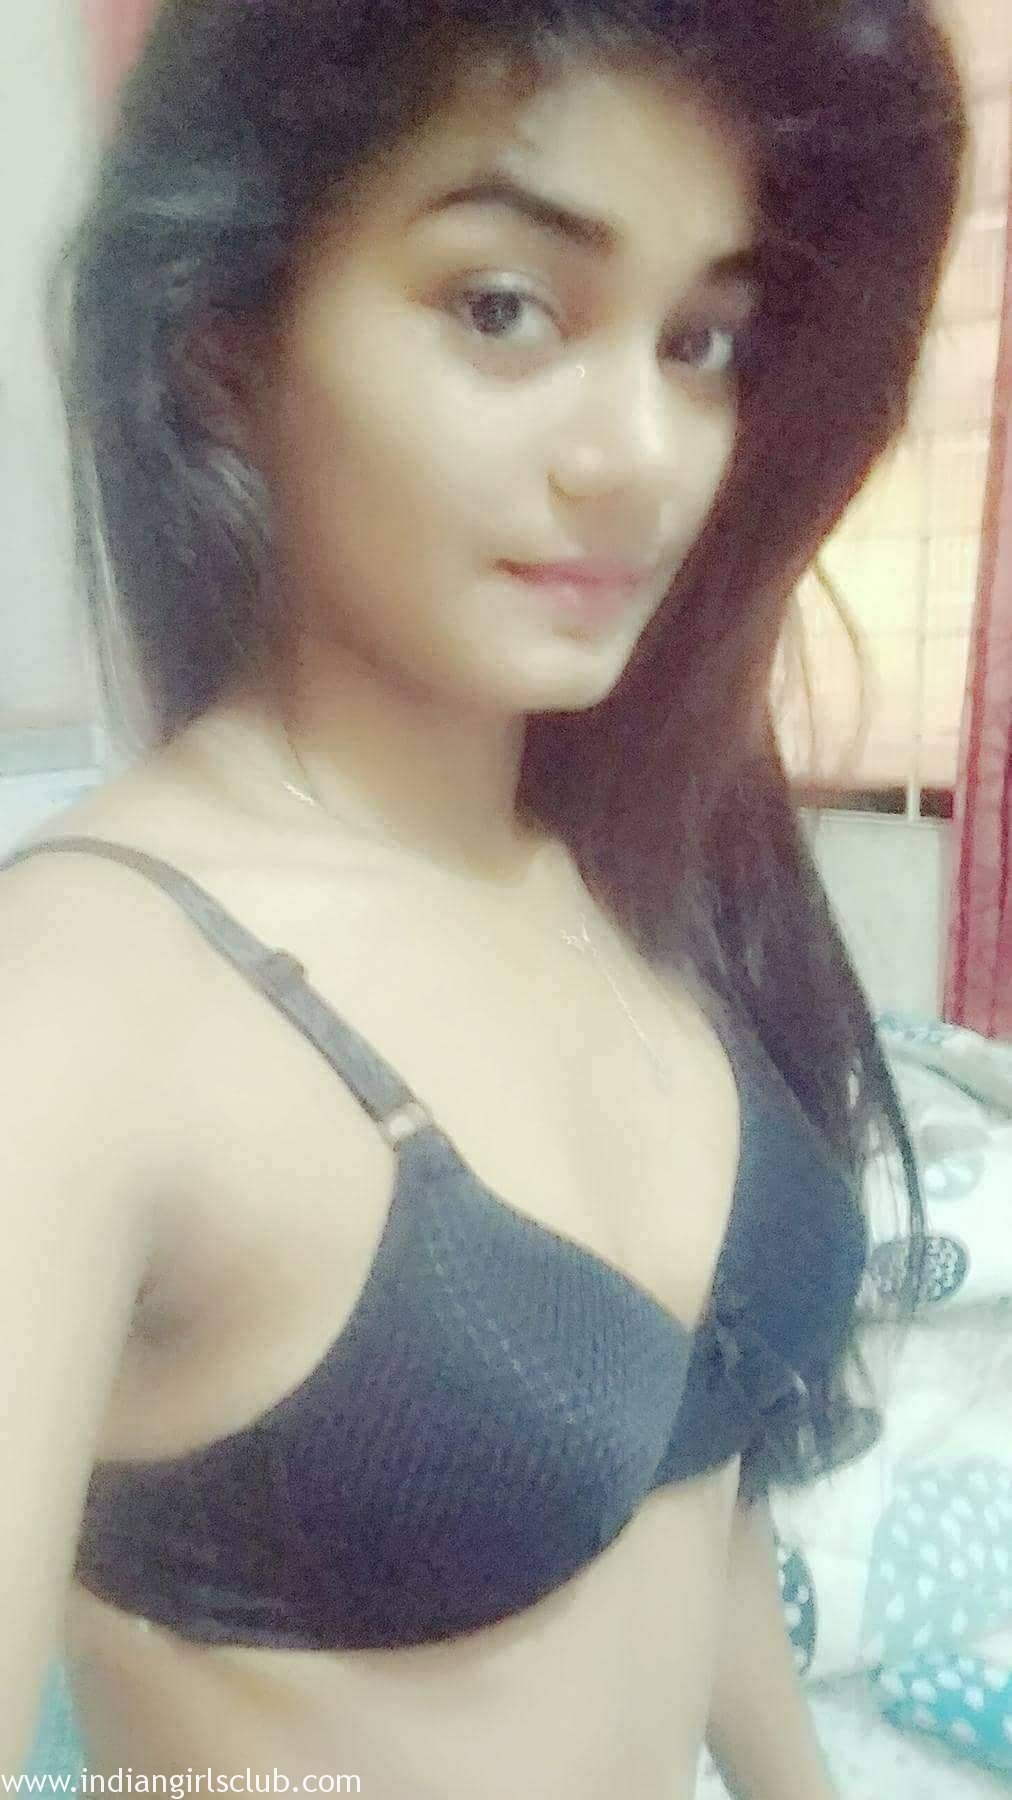 juicy_indian_teen_homemade_porn_25 - Indian Girls Club